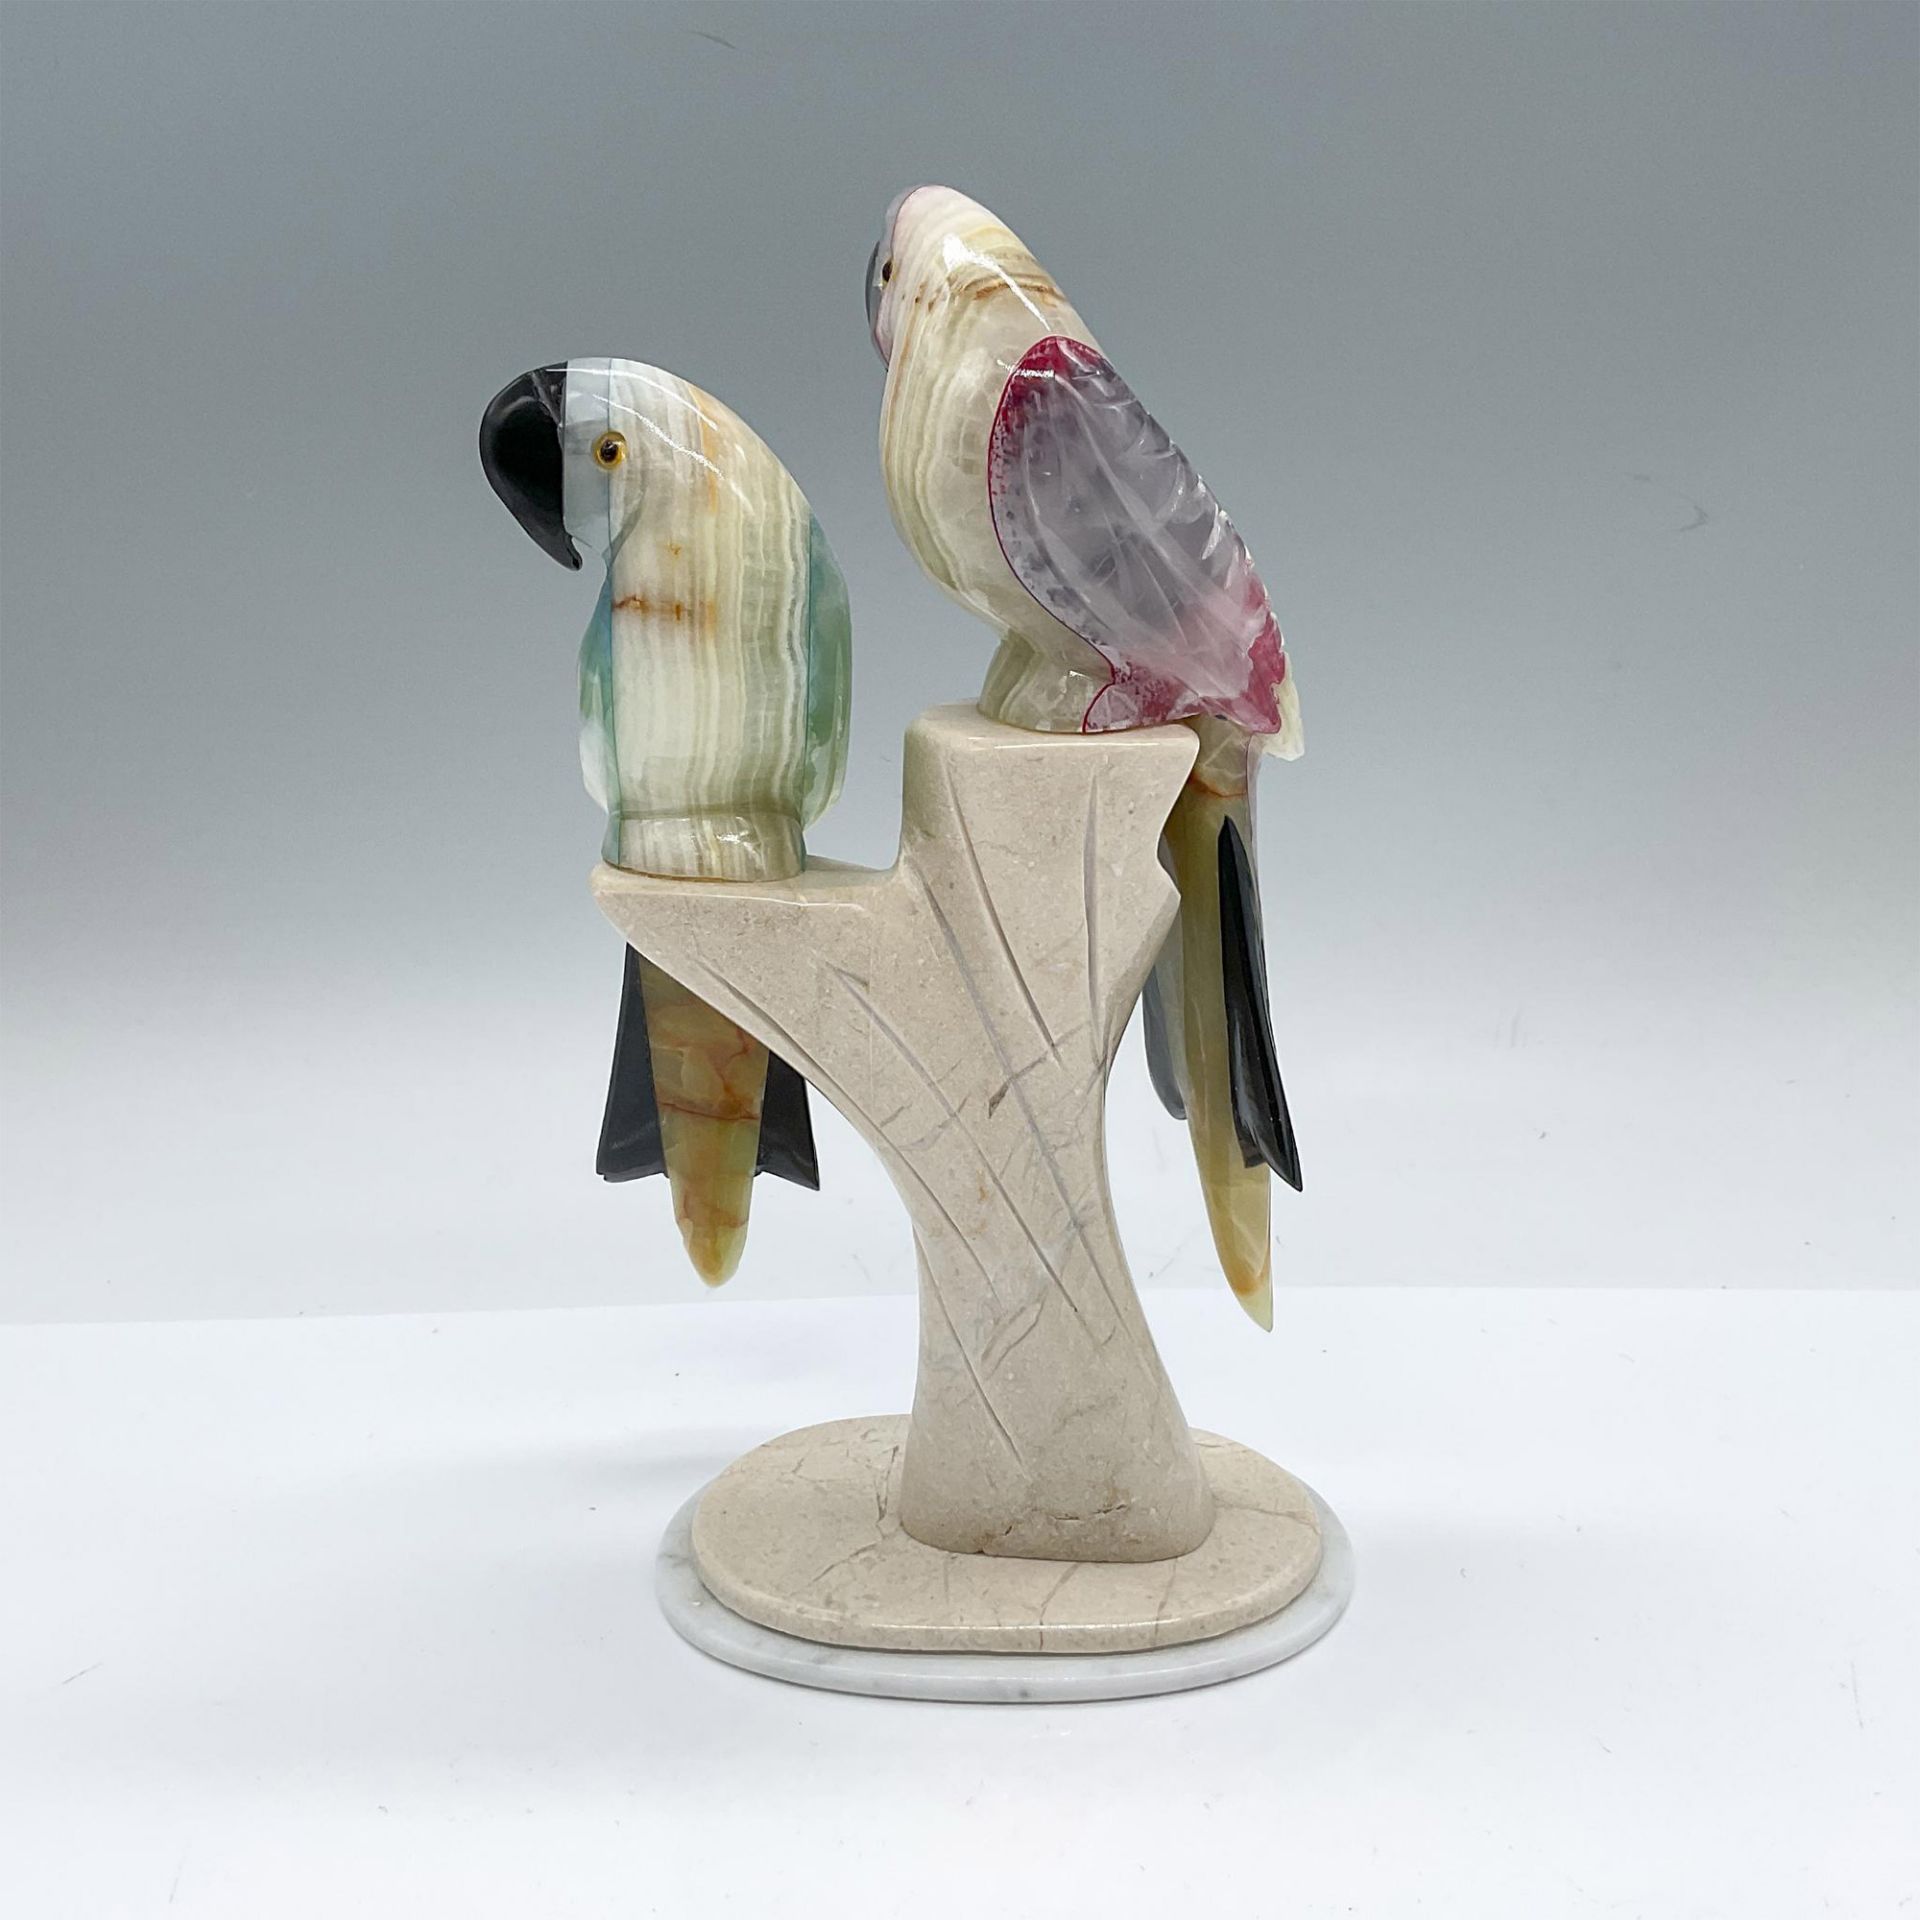 Vintage Stone Birds Figurine - Image 2 of 3